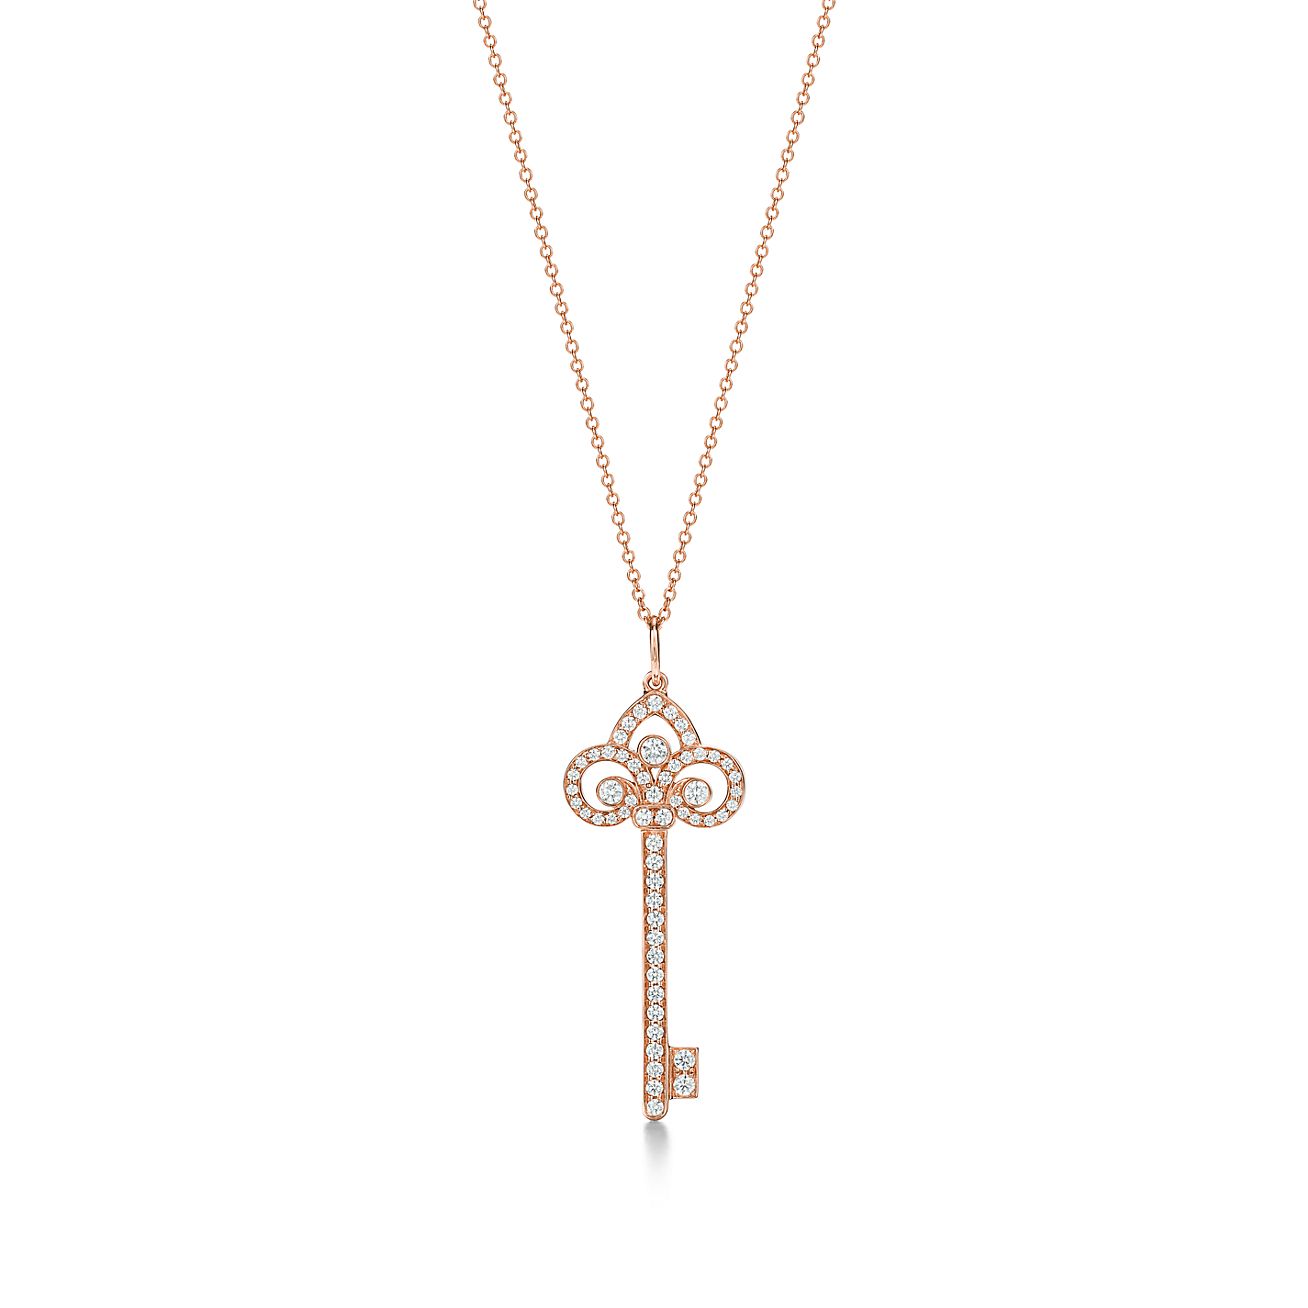 Tiffany Keys fleur de lis key pendant in 18k rose gold with 